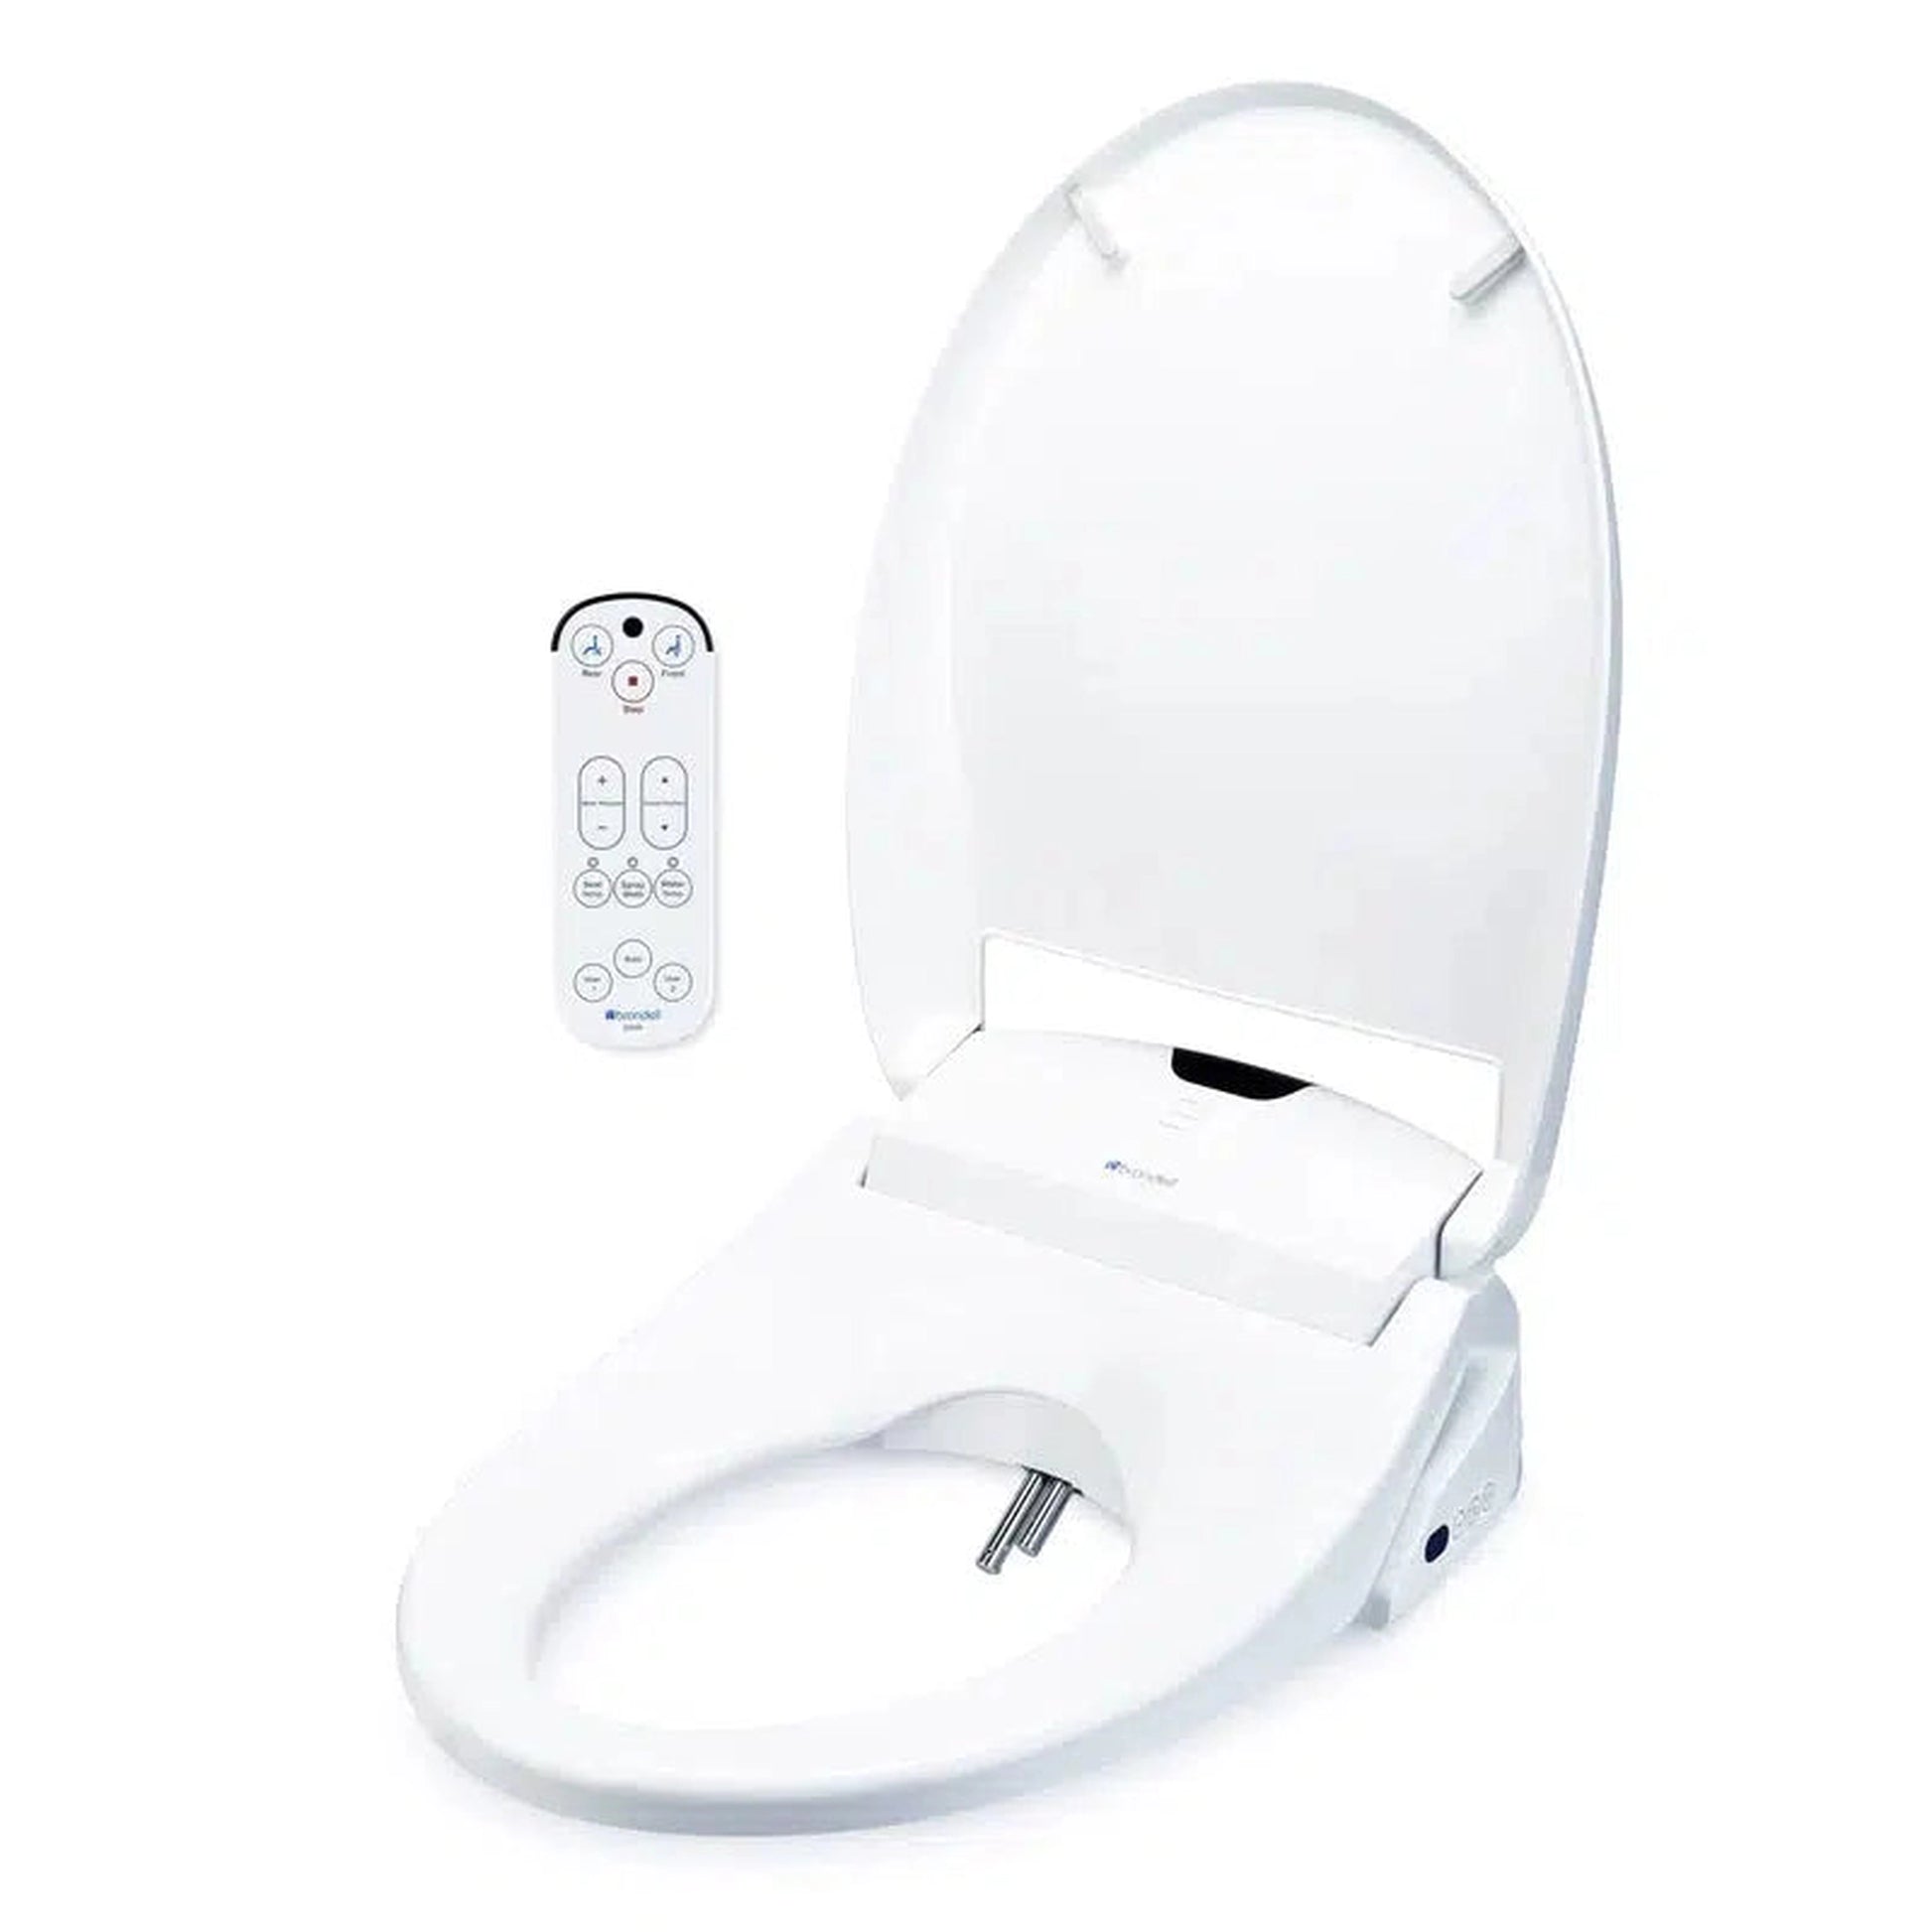 Dropship Electric Bidet Seat For Elongated Toilets,Heated Bidet